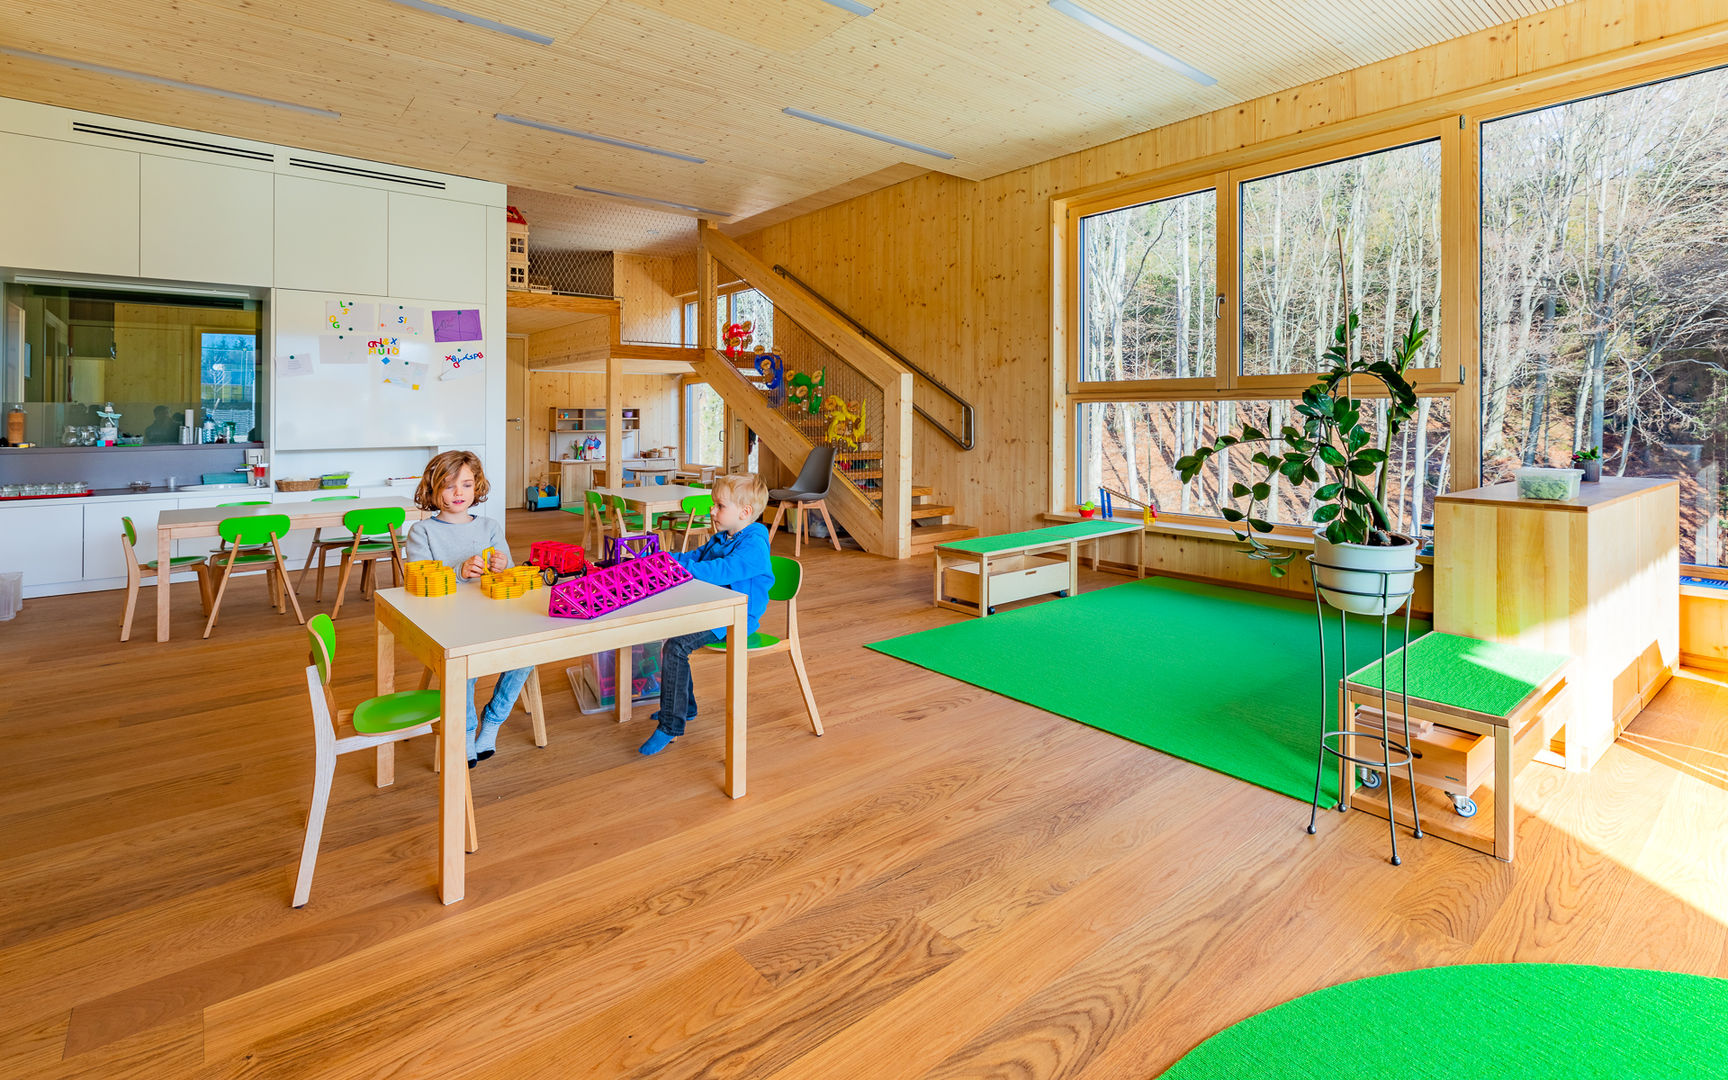 Gruppenraum grün 1 archipur Architekten aus Wien Gewerbeflächen Holz Gruppenraum, Kinderküche, Kindergalerie,Schulen